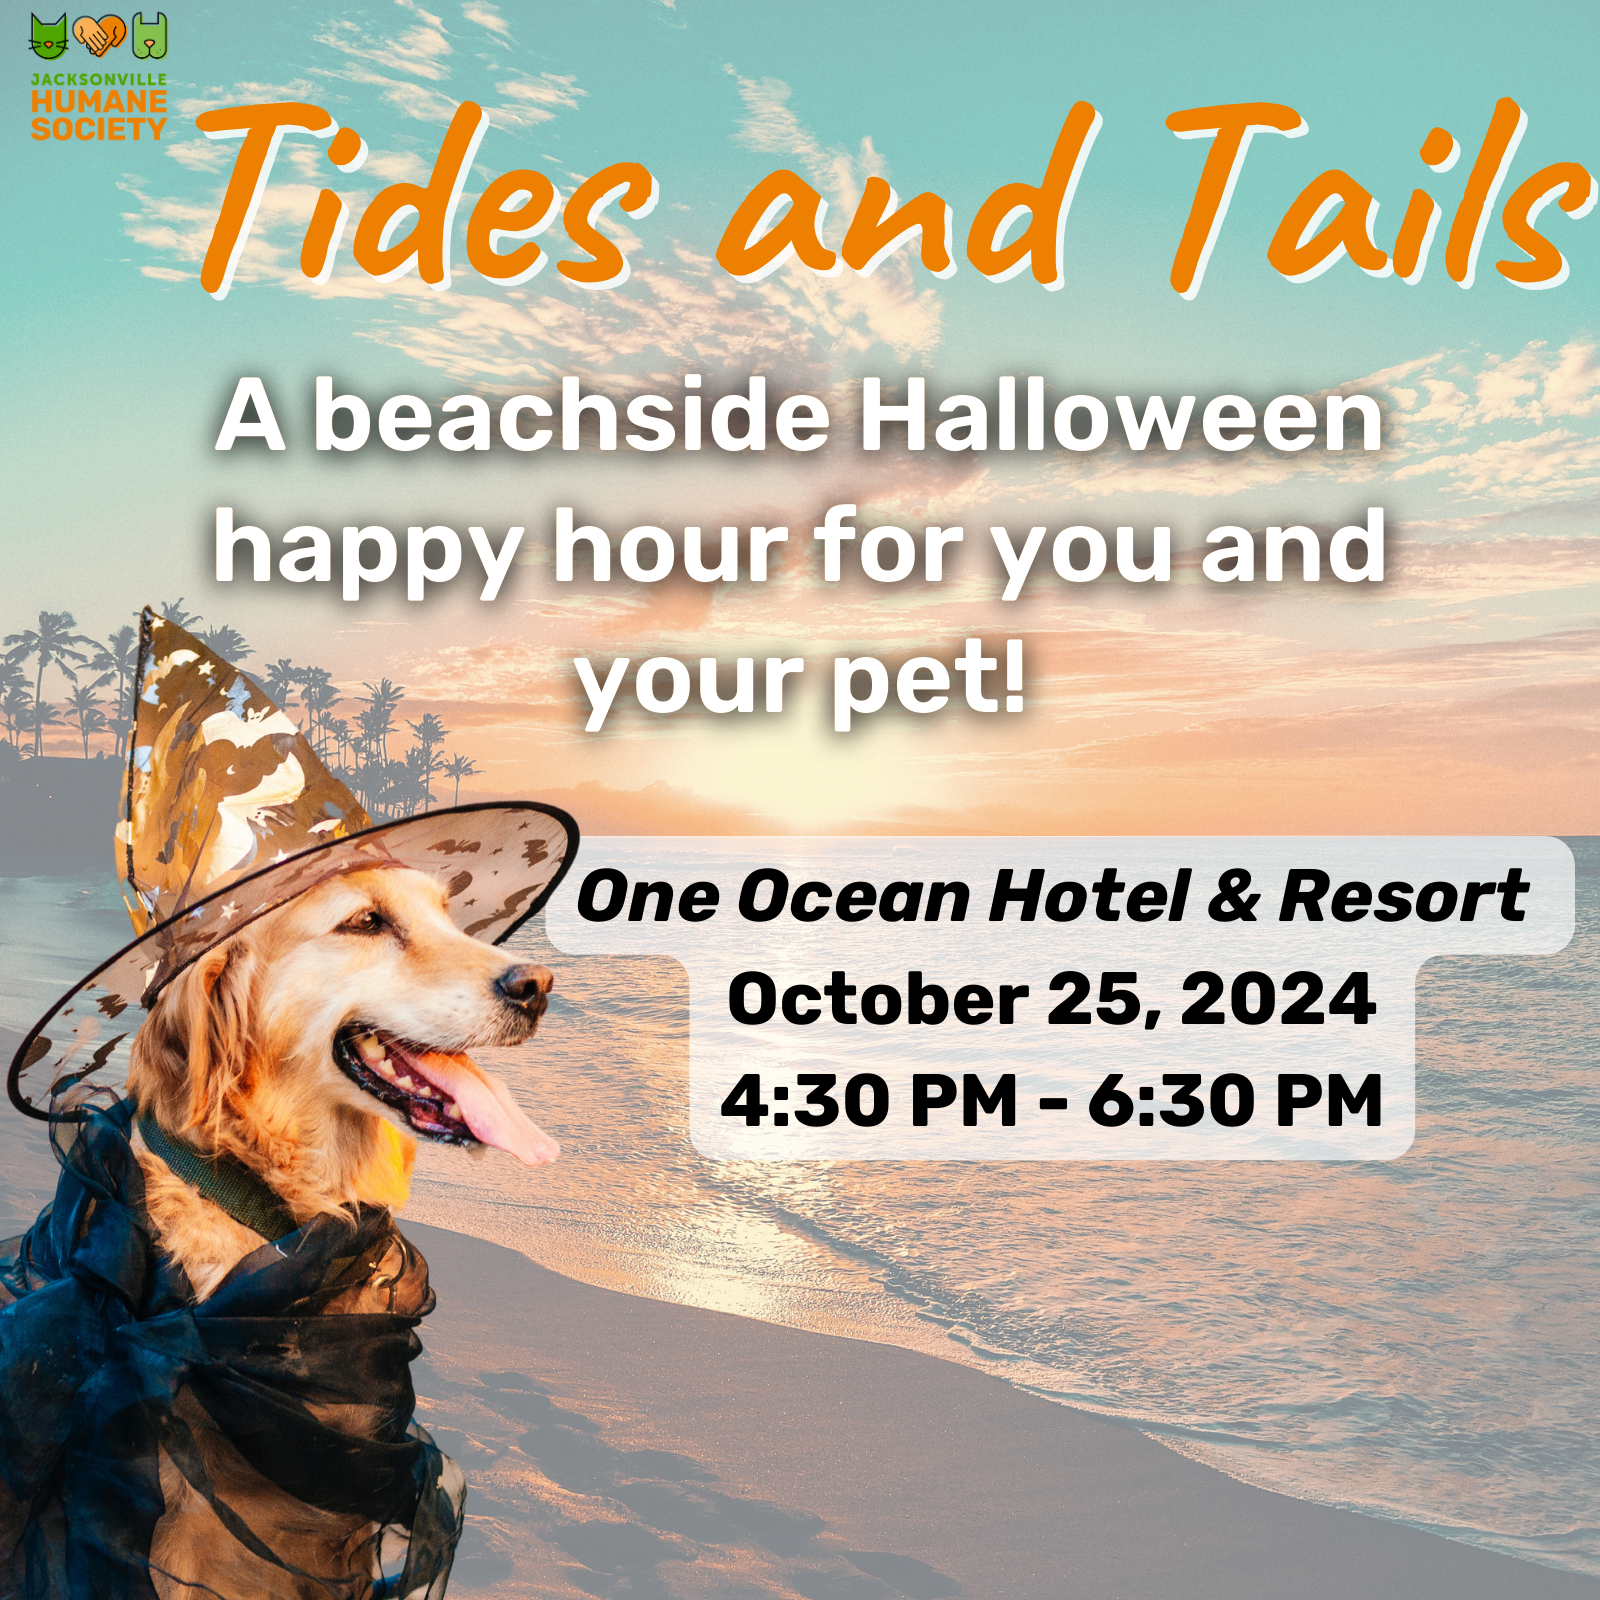 Tides and Tails October Event Image w Sponsor